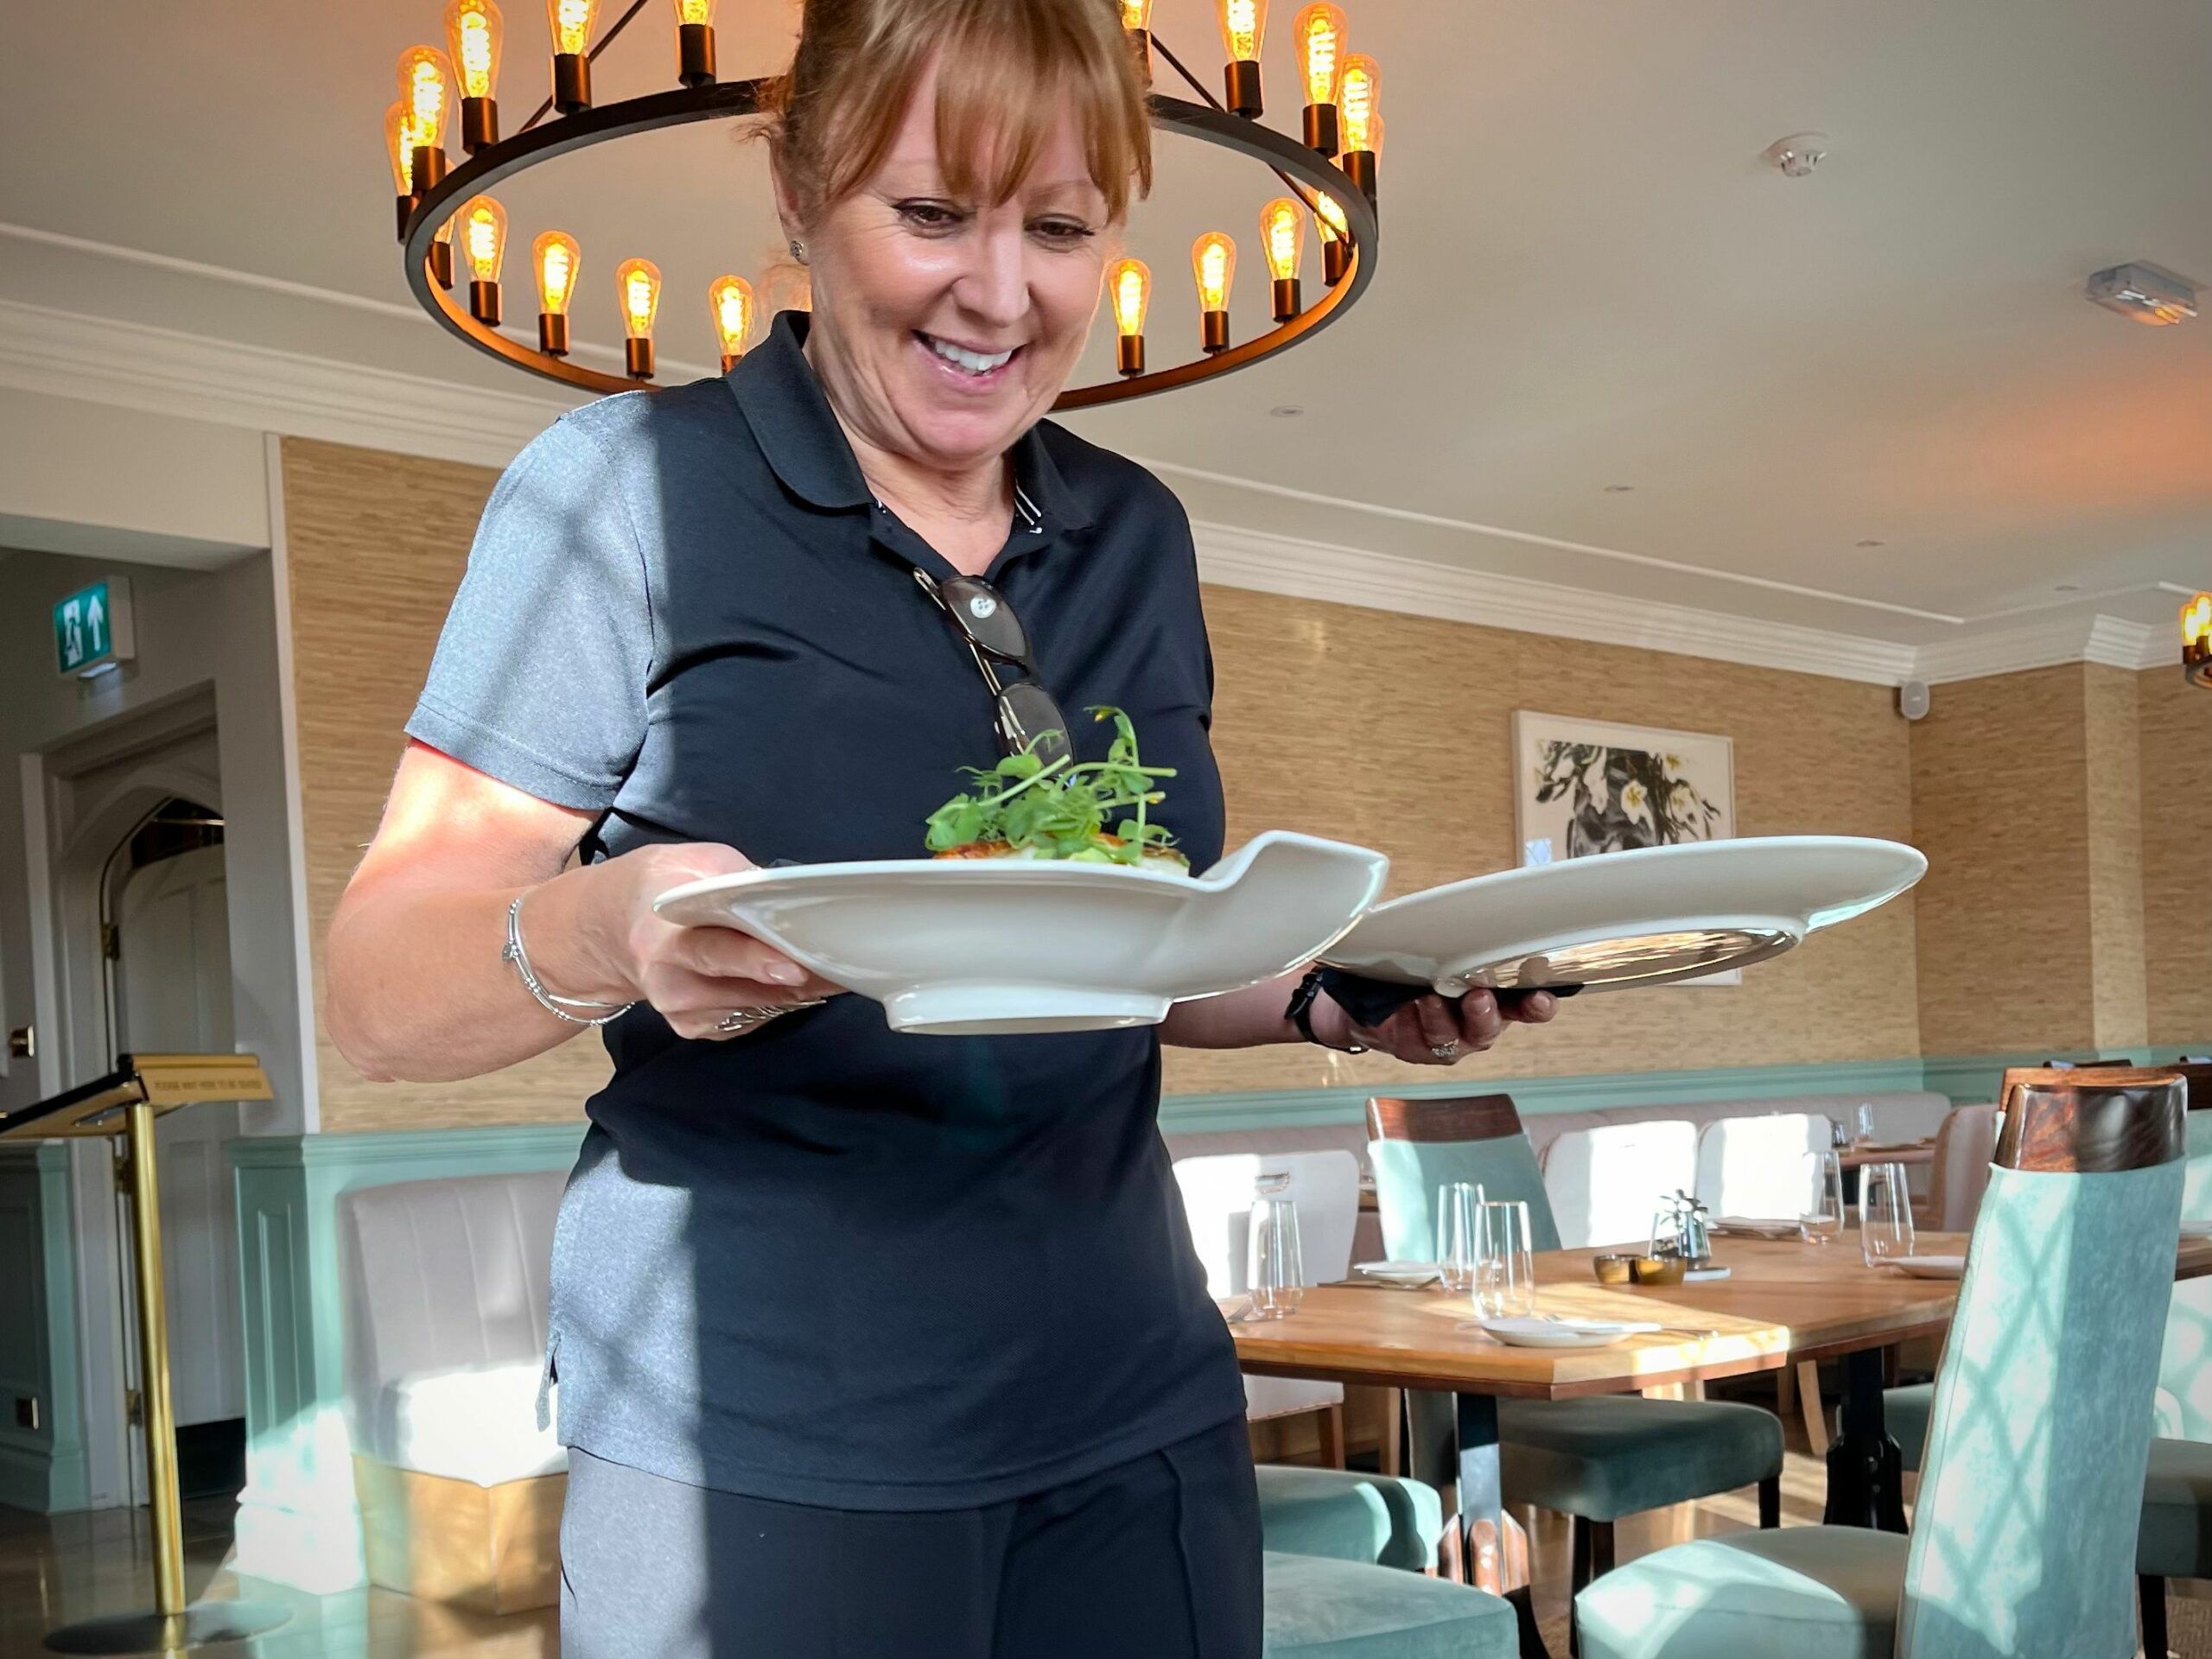 waiter Karen holding two main dishes in white plates